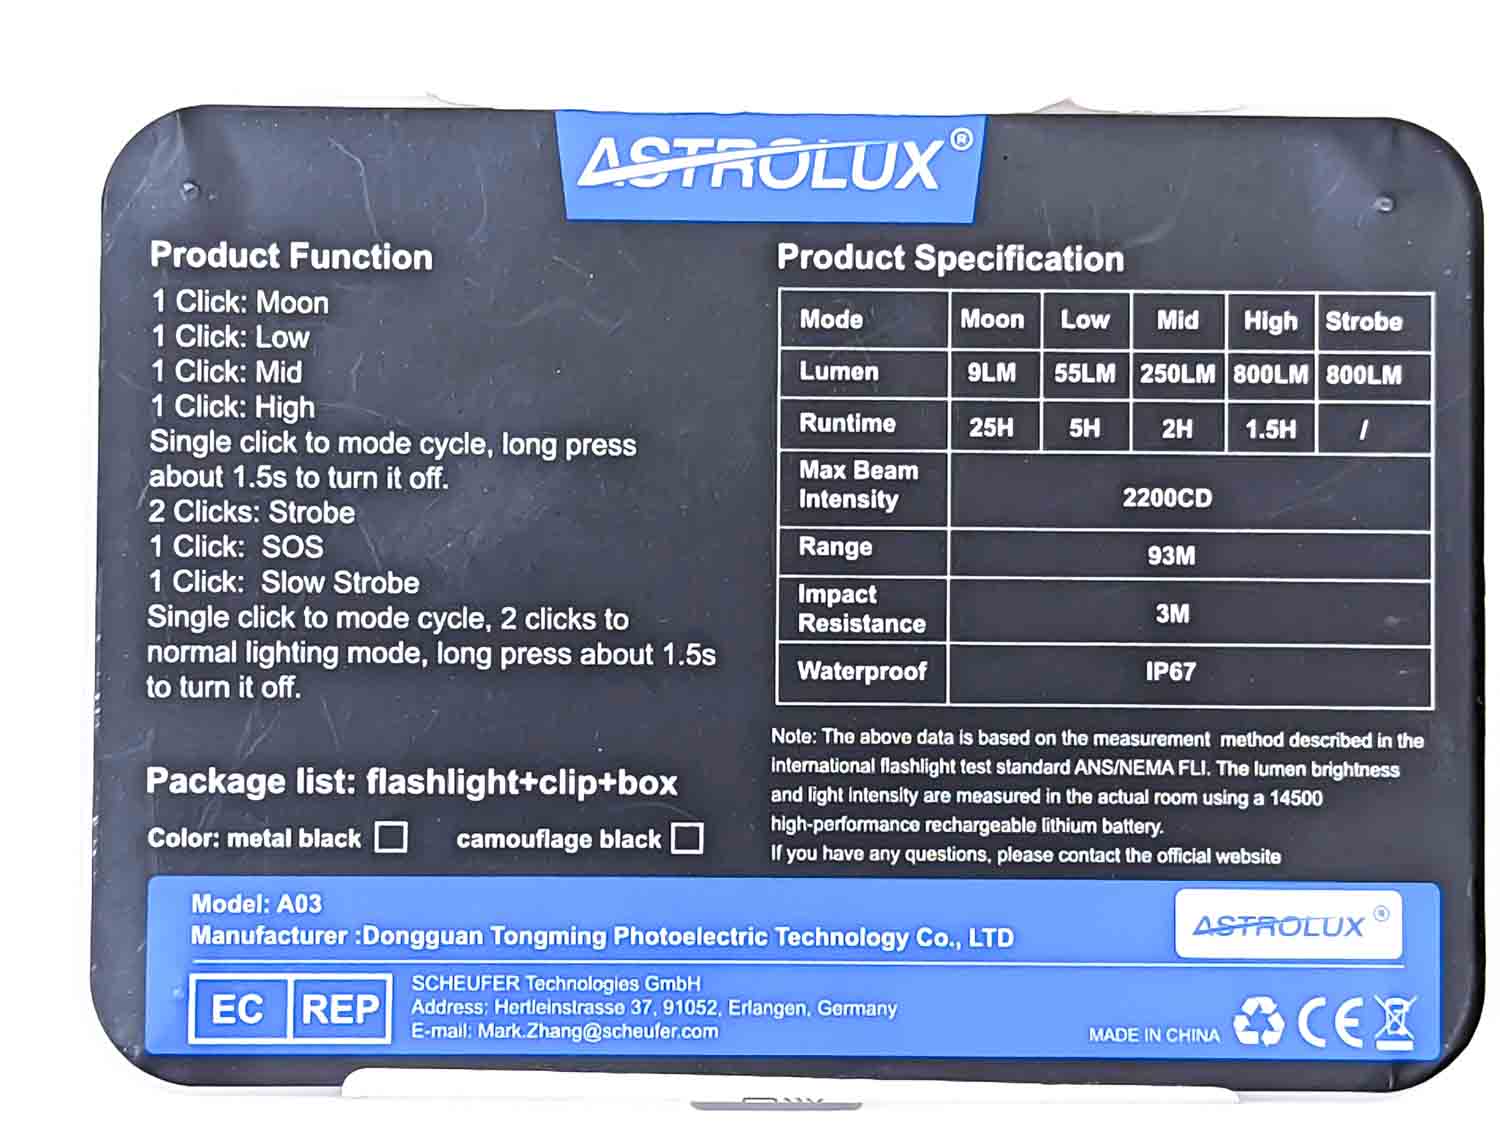 Astrolux A03 box